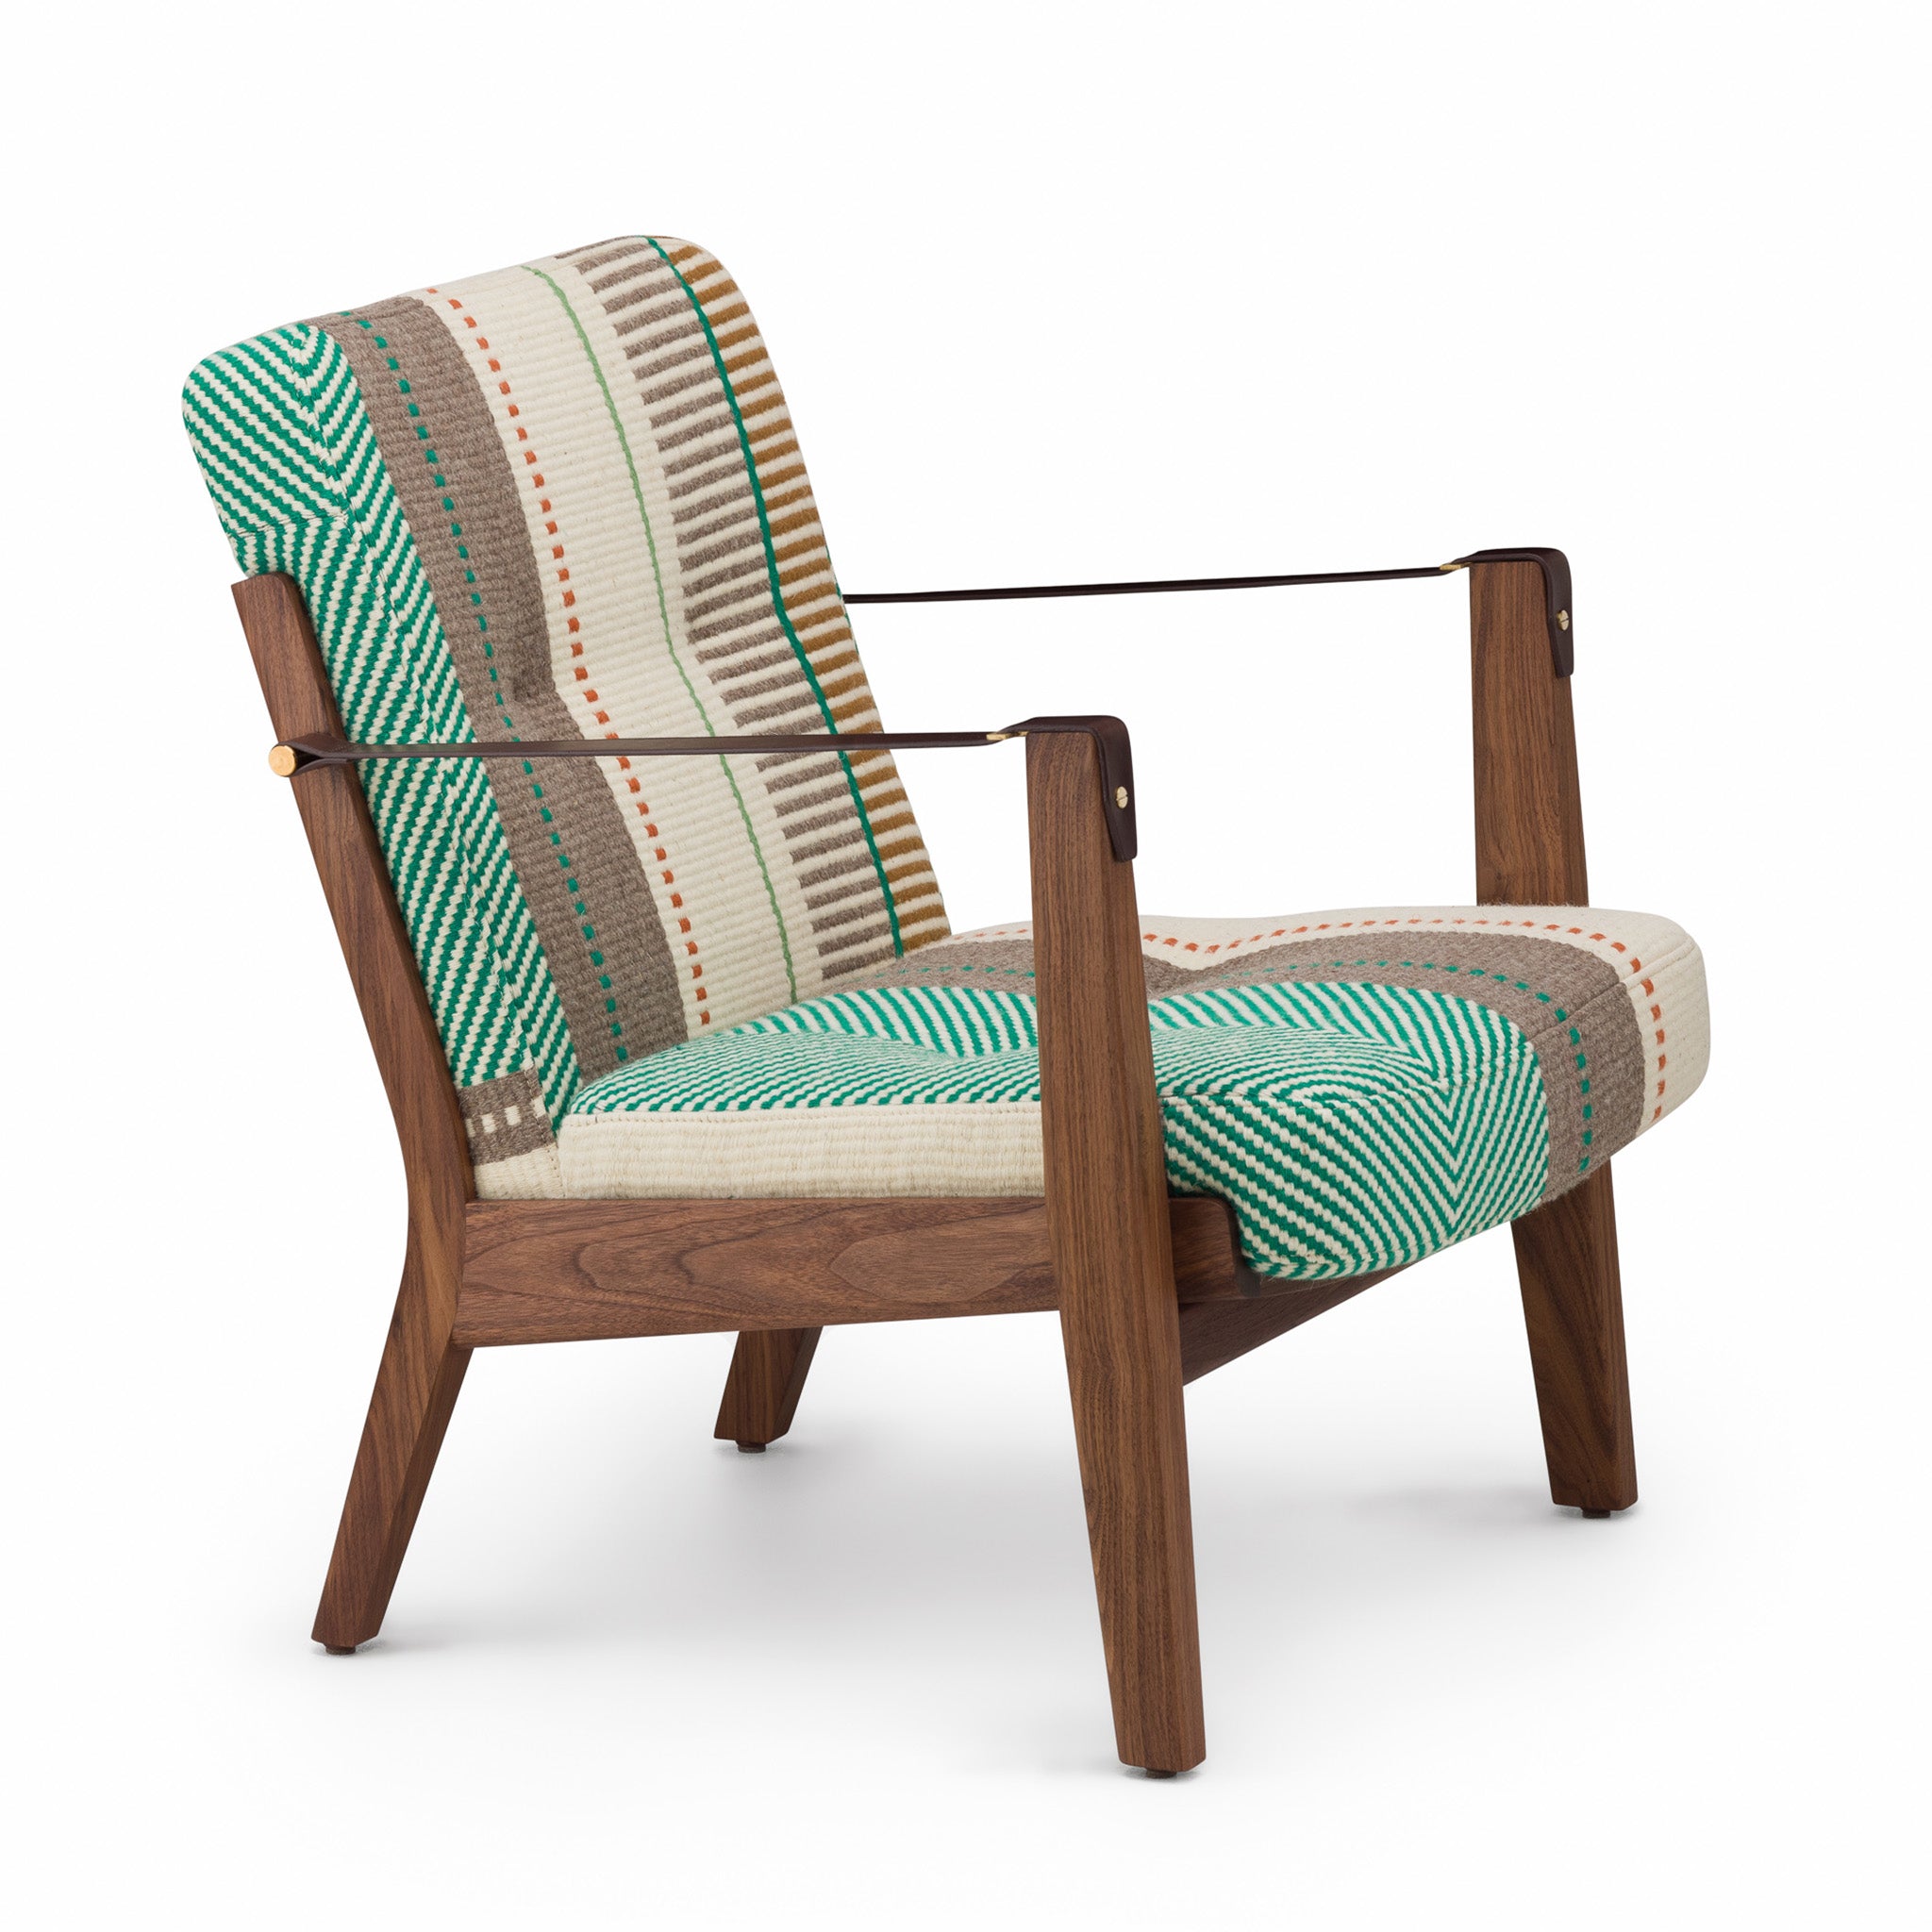 Capo Lounge Armchair - Manta Espinhada Upholstery by Neri&Hu